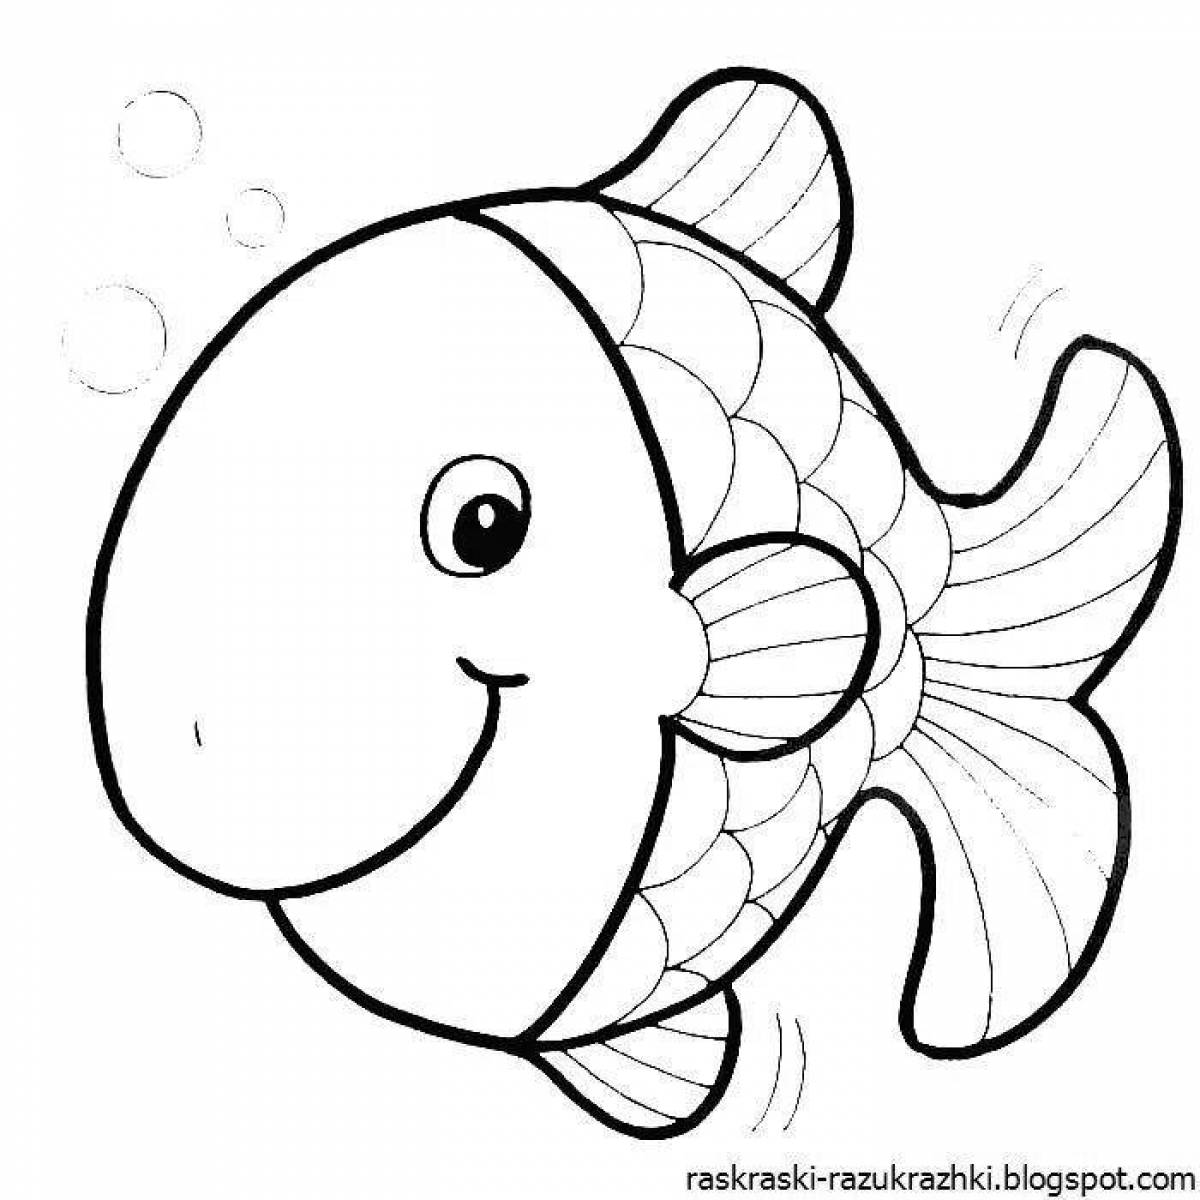 Рыба для ребенка 2. Рыба раскраска для детей. Рыбка раскраска для детей. Рисунок рыбки для раскрашивания. Рыбка раскраска для самых маленьких.